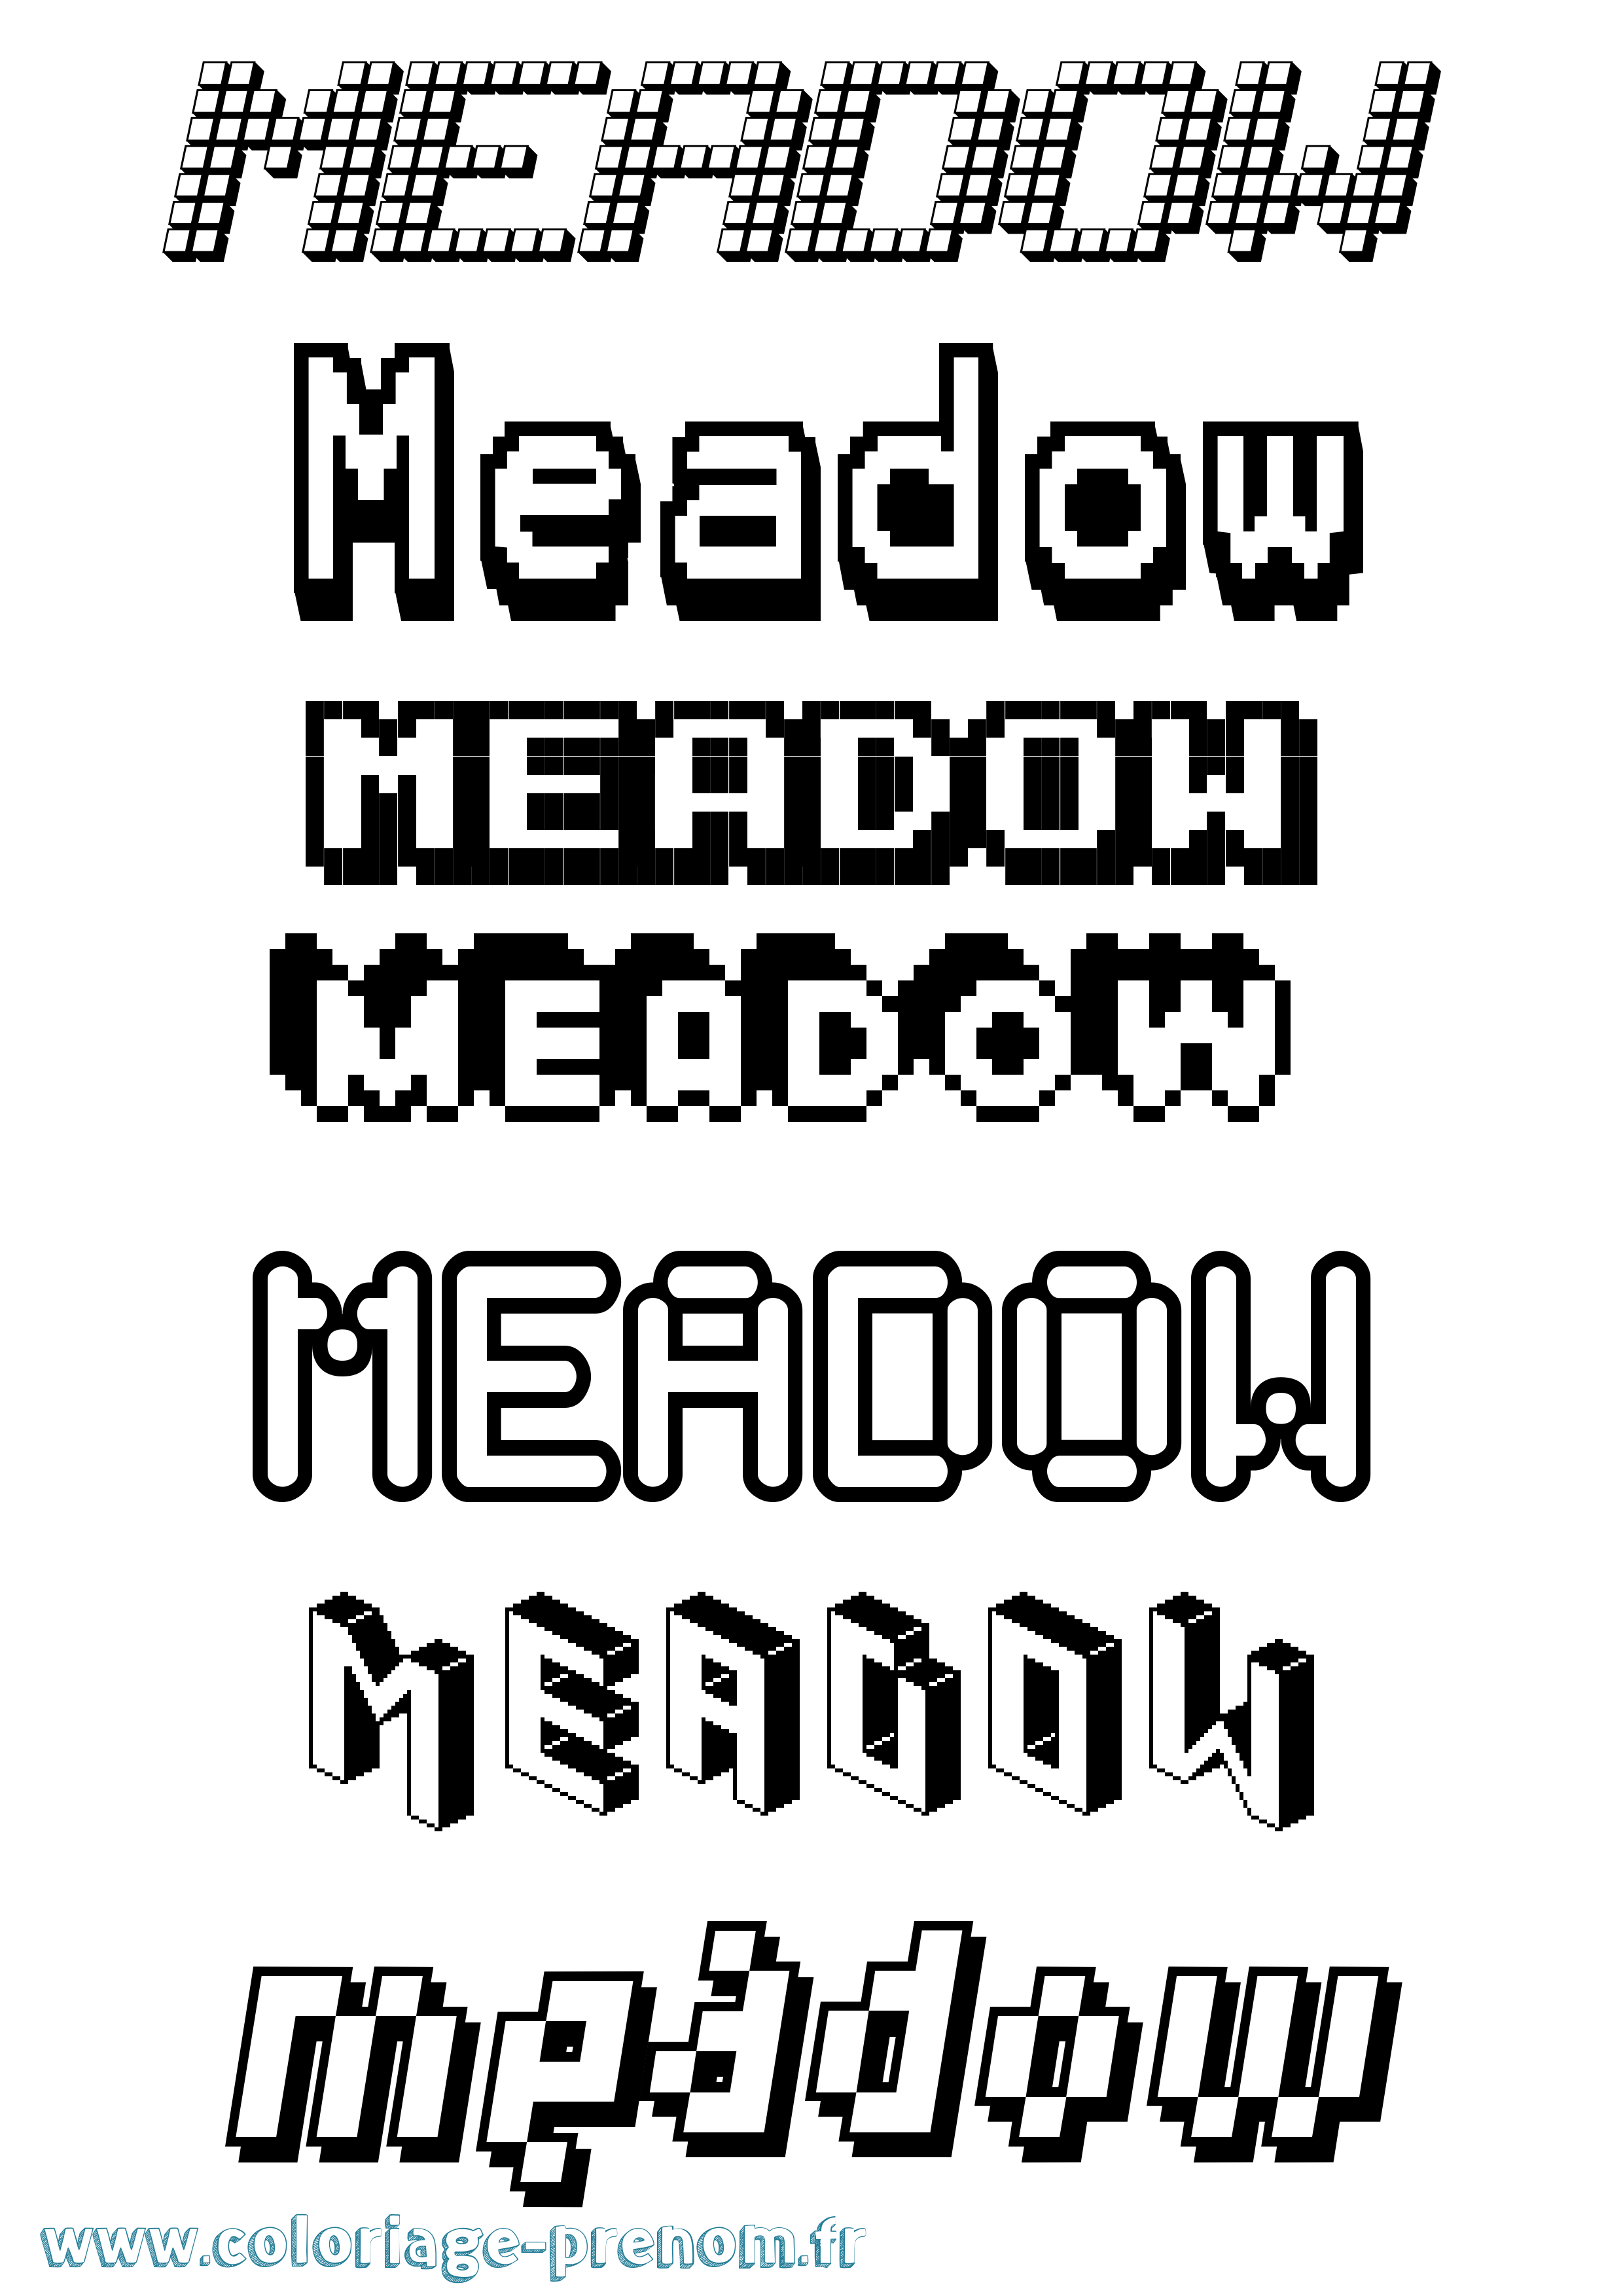 Coloriage prénom Meadow Pixel